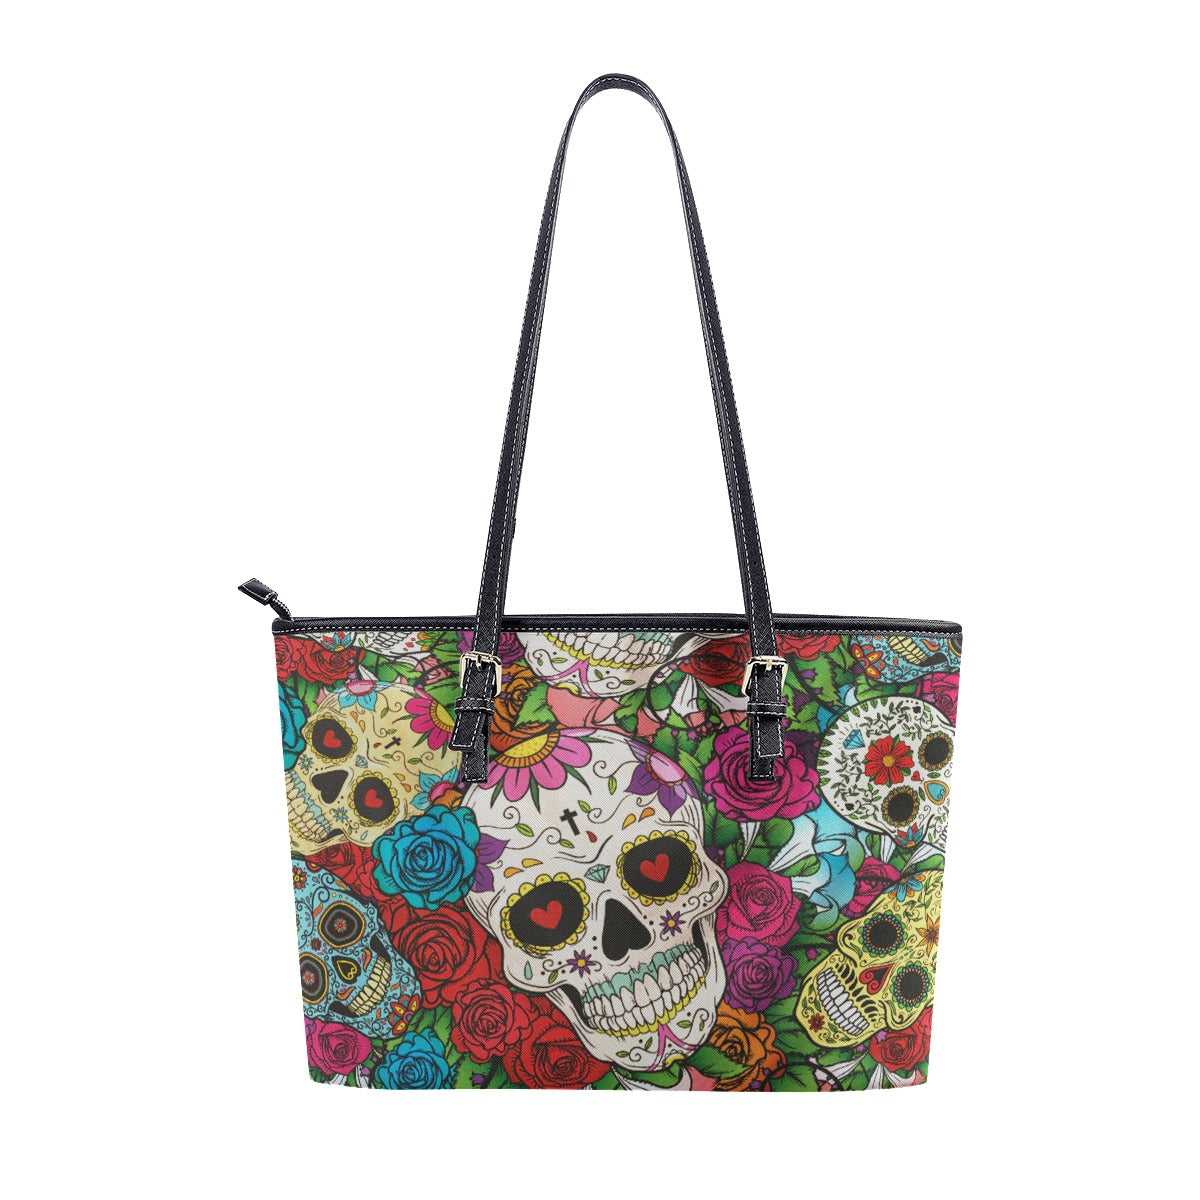 Sugar skull Day of the dead Women's Tote Bag, Calavera Mexican skull handbag shoulder bag purse